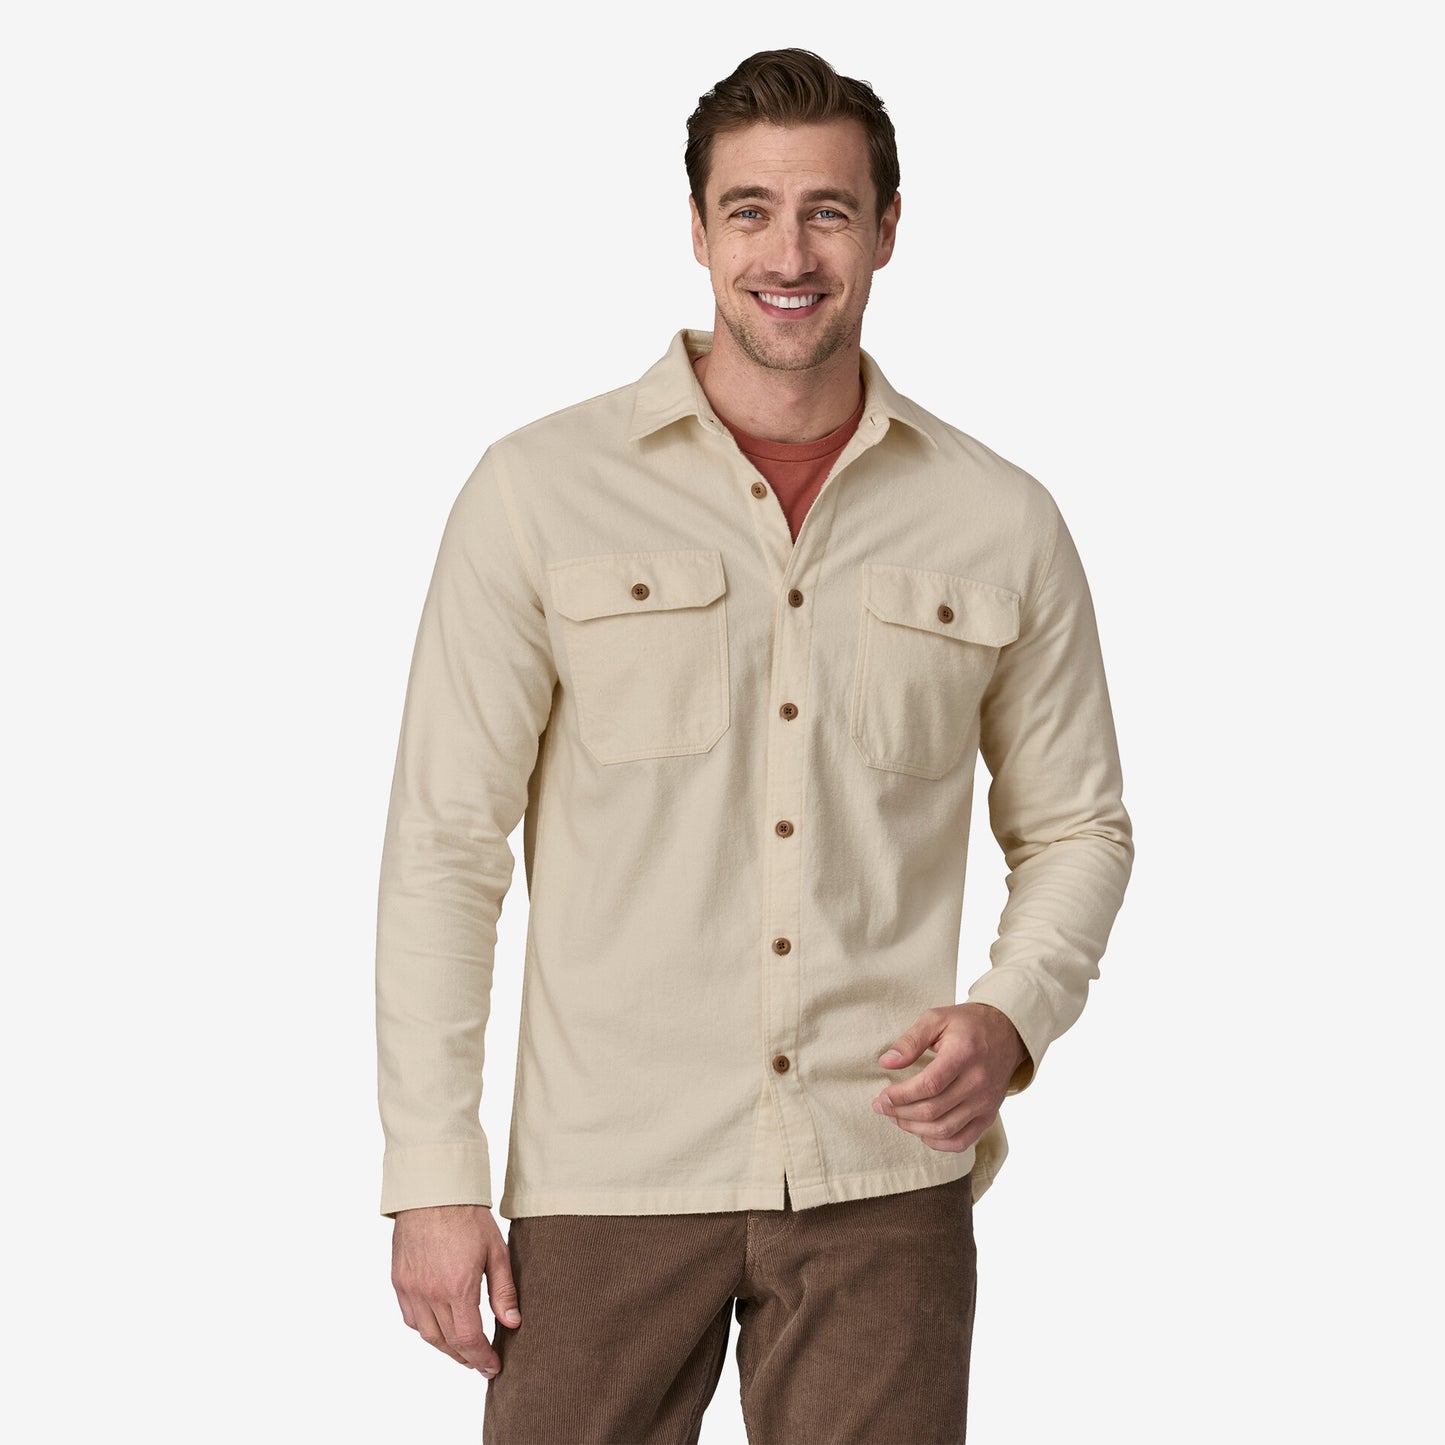 patagonia(パタゴニア) Men's L/S Organic Cotton MW Fjord Flannel Shirt 42400